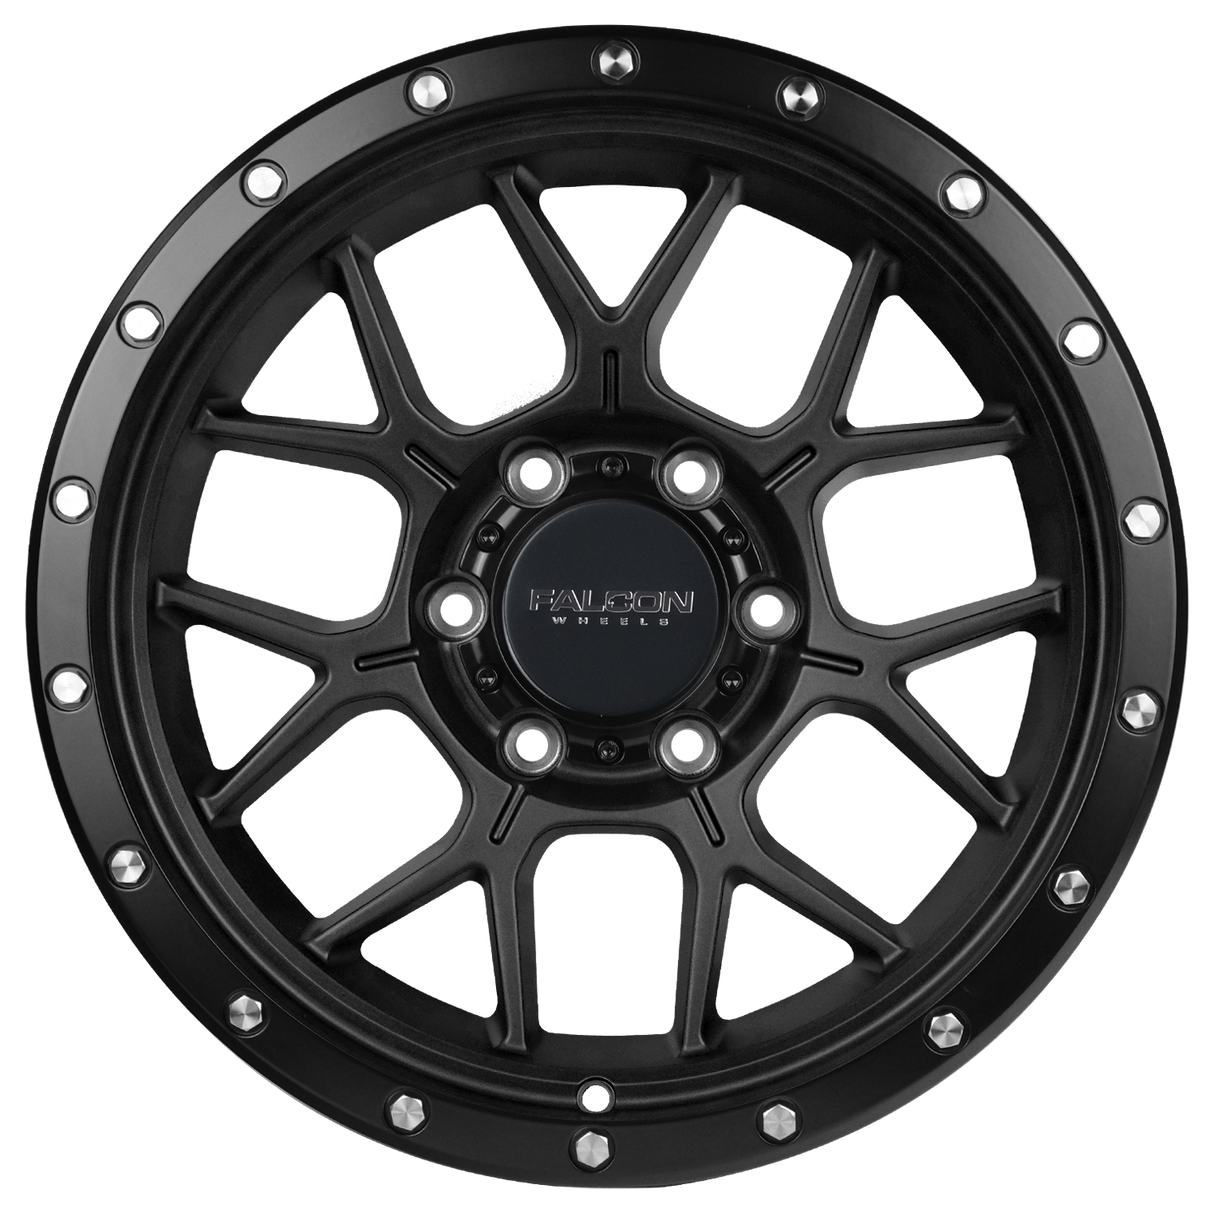 Falcon Wheel TX Titan 17x9 in Matte Black - Roam Overland Outfitters